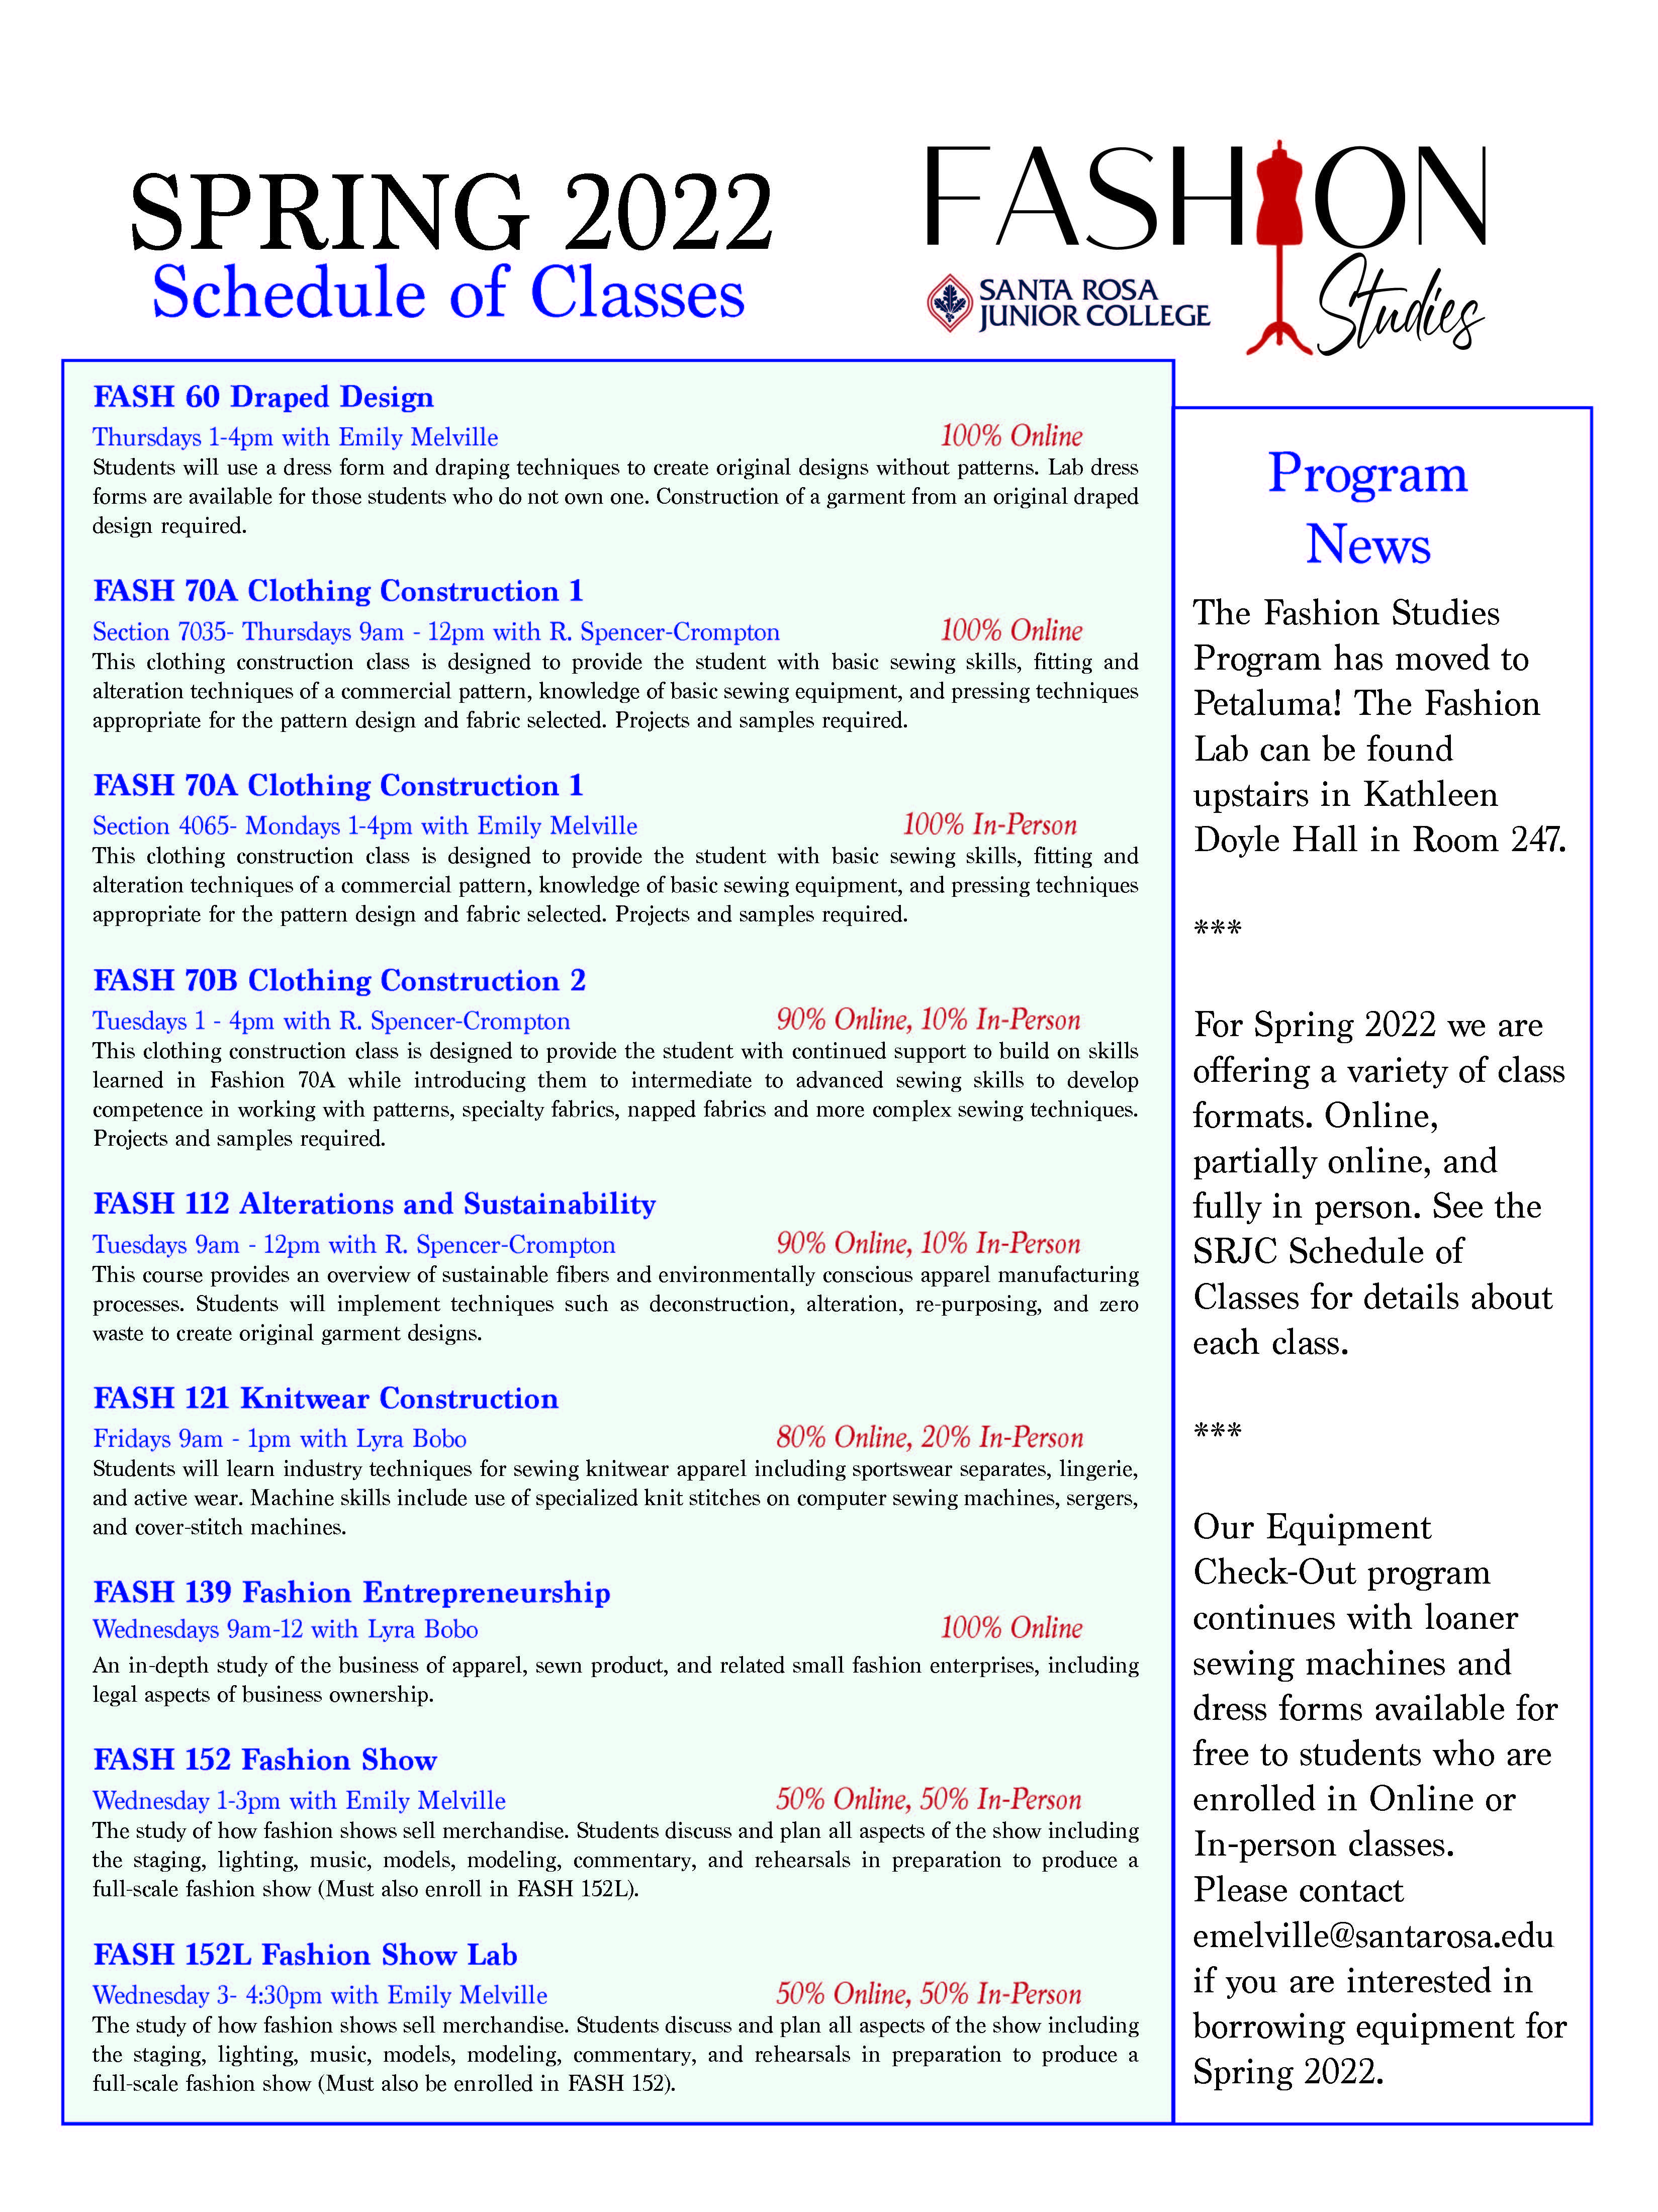 Srjc Calendar 2022 Schedule Of Classes - Spring 2022 | Fashion Studies